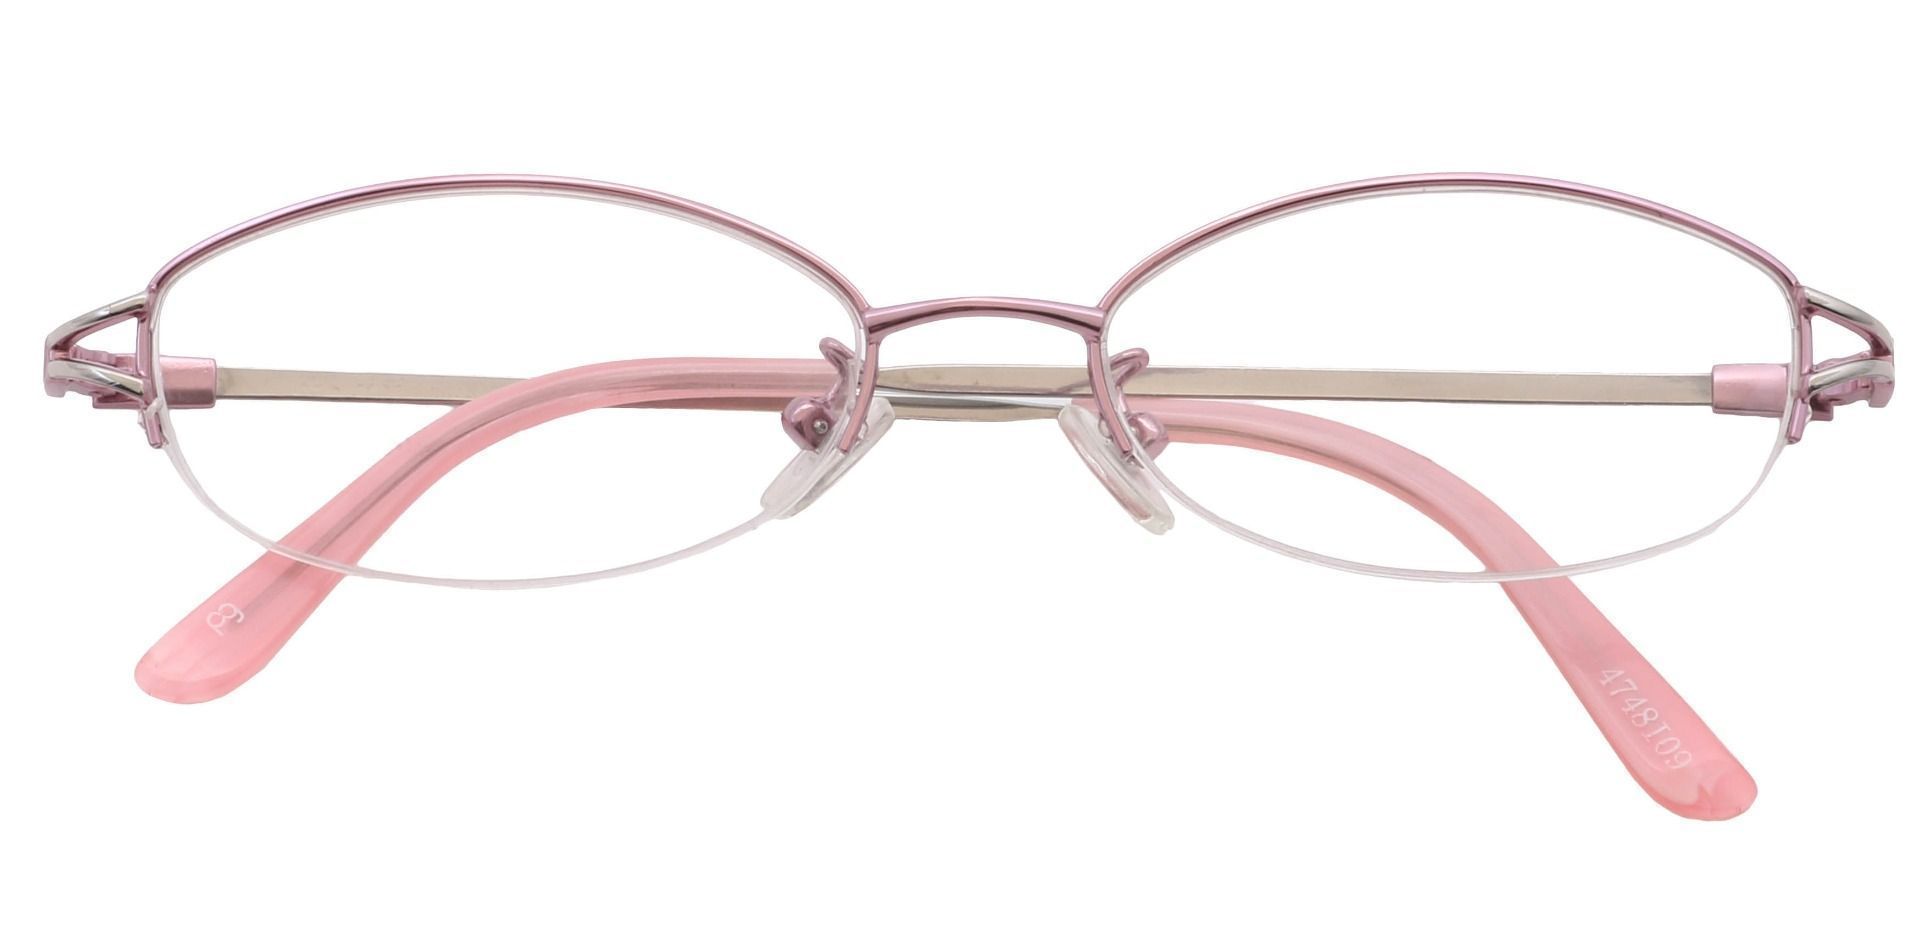 Corsica Oval Blue Light Blocking Glasses - Pink